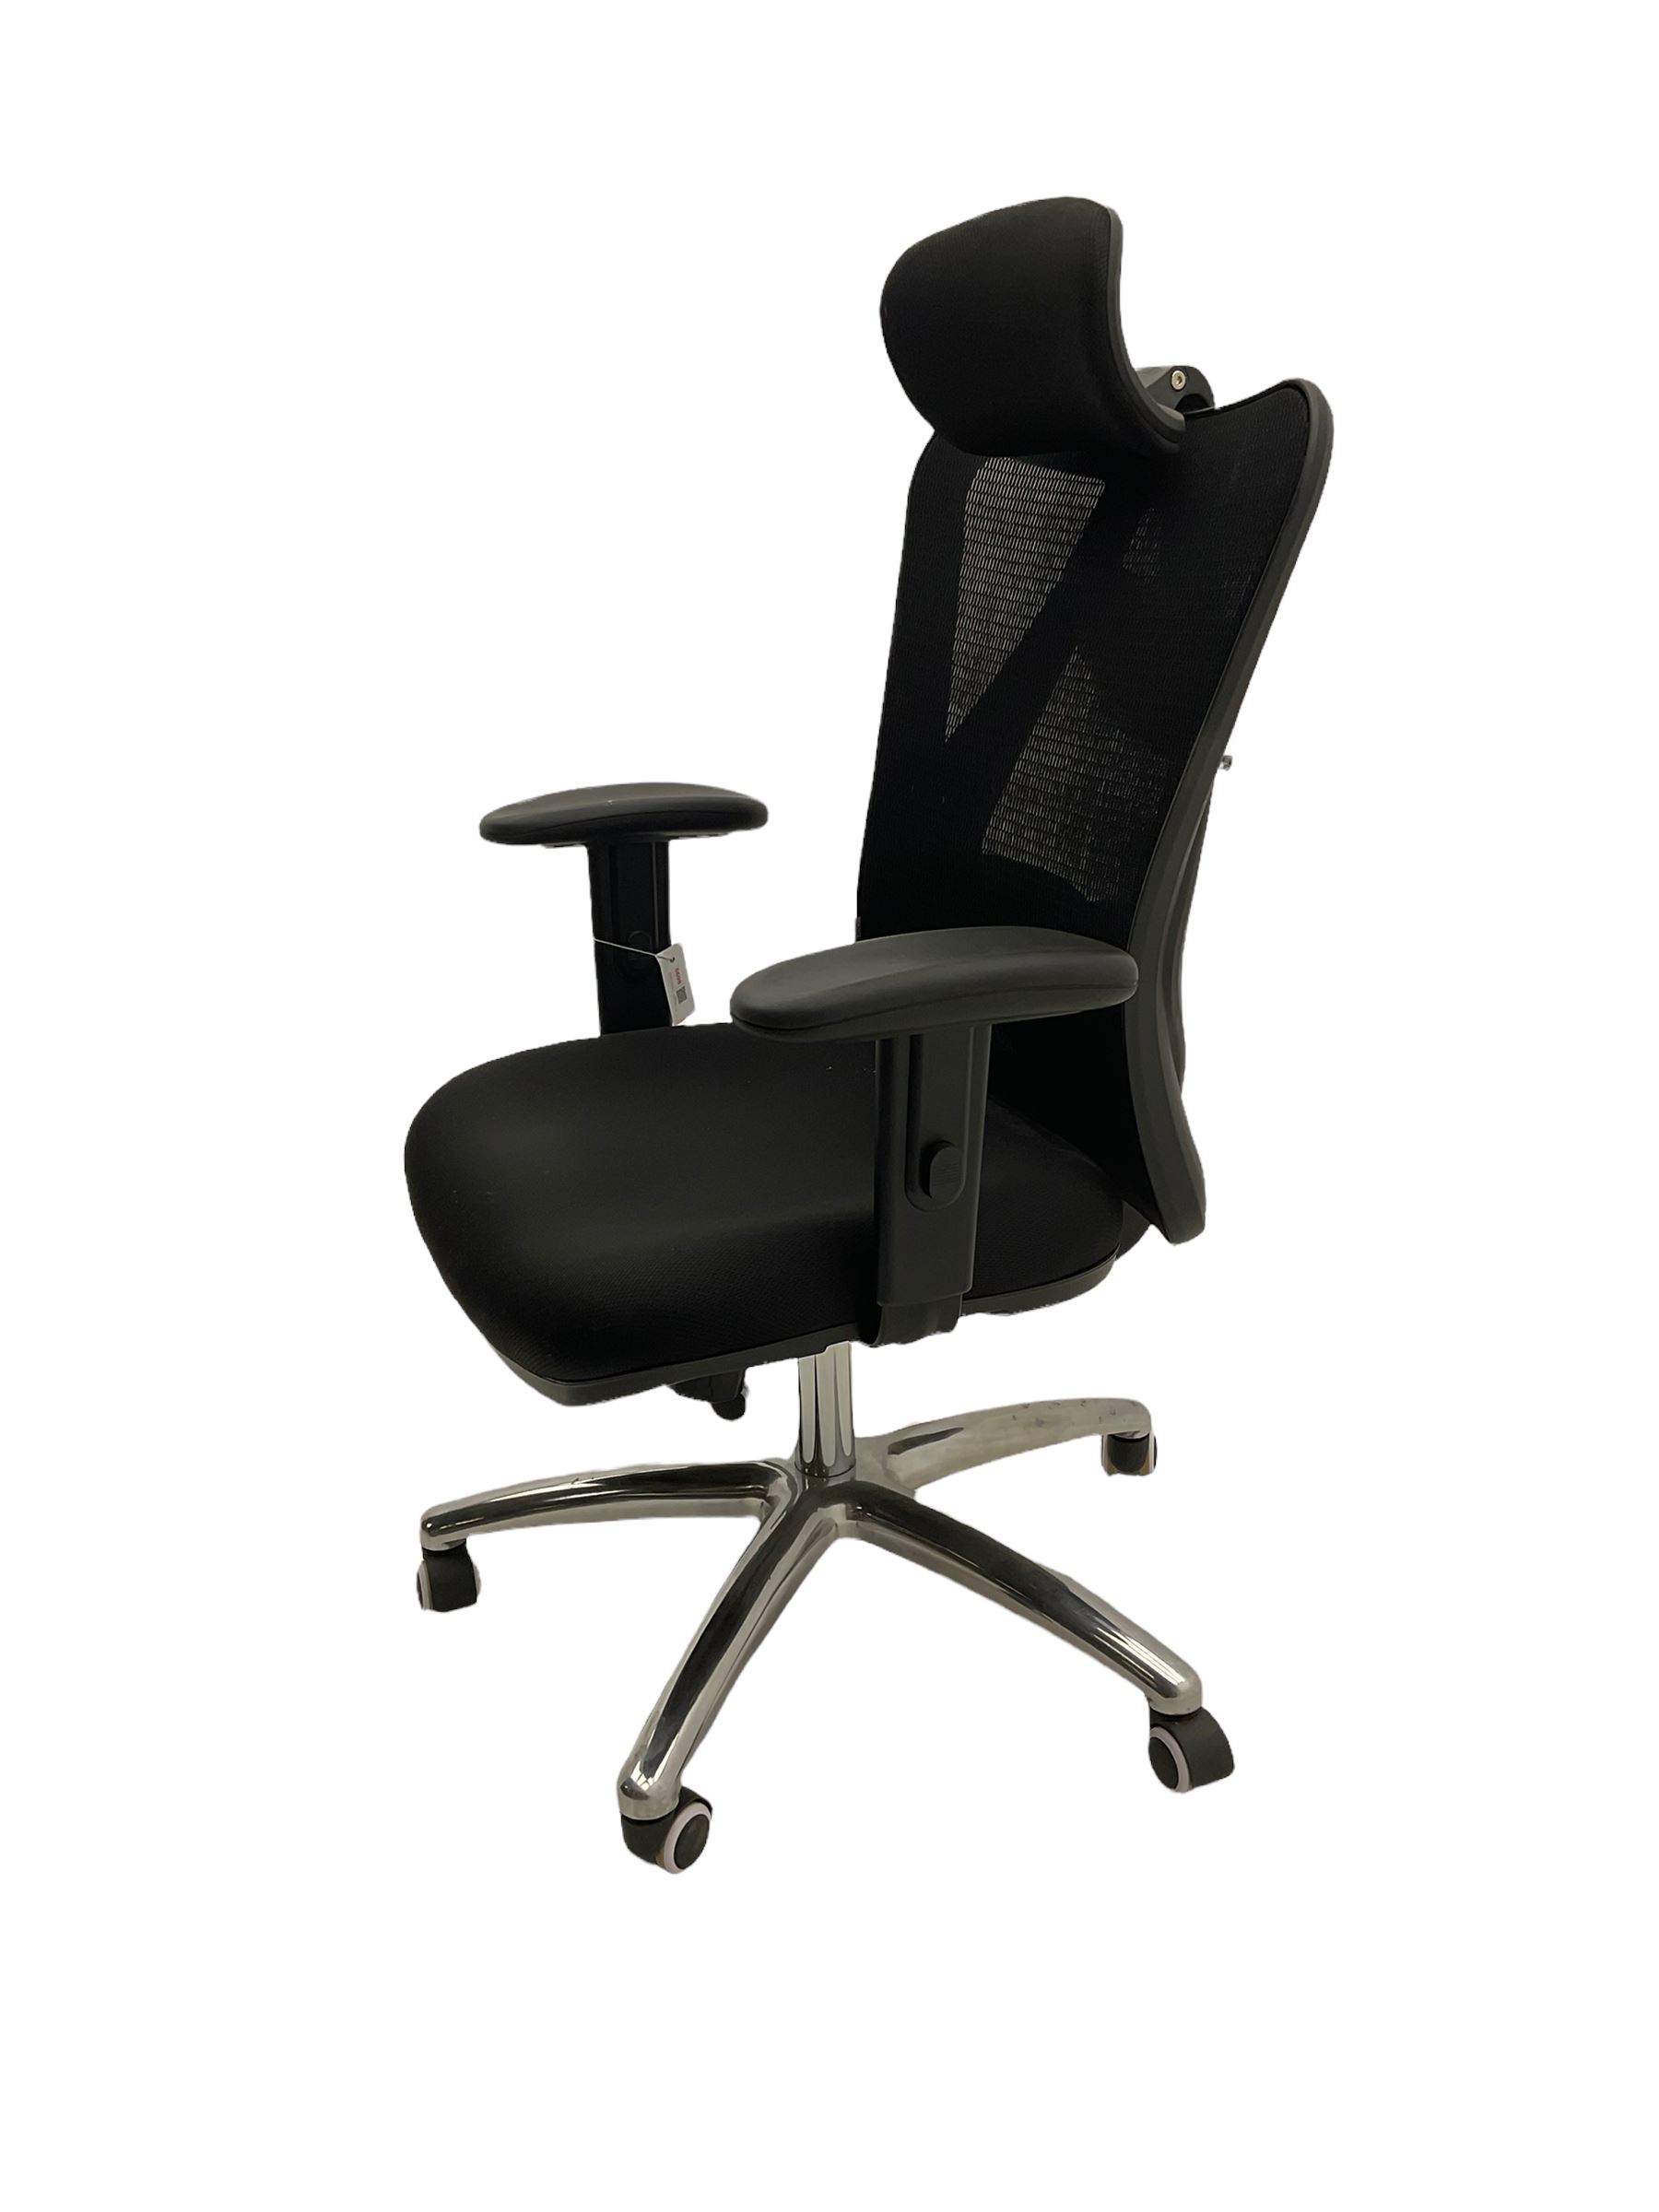 Office swivel desk chair - Image 2 of 2